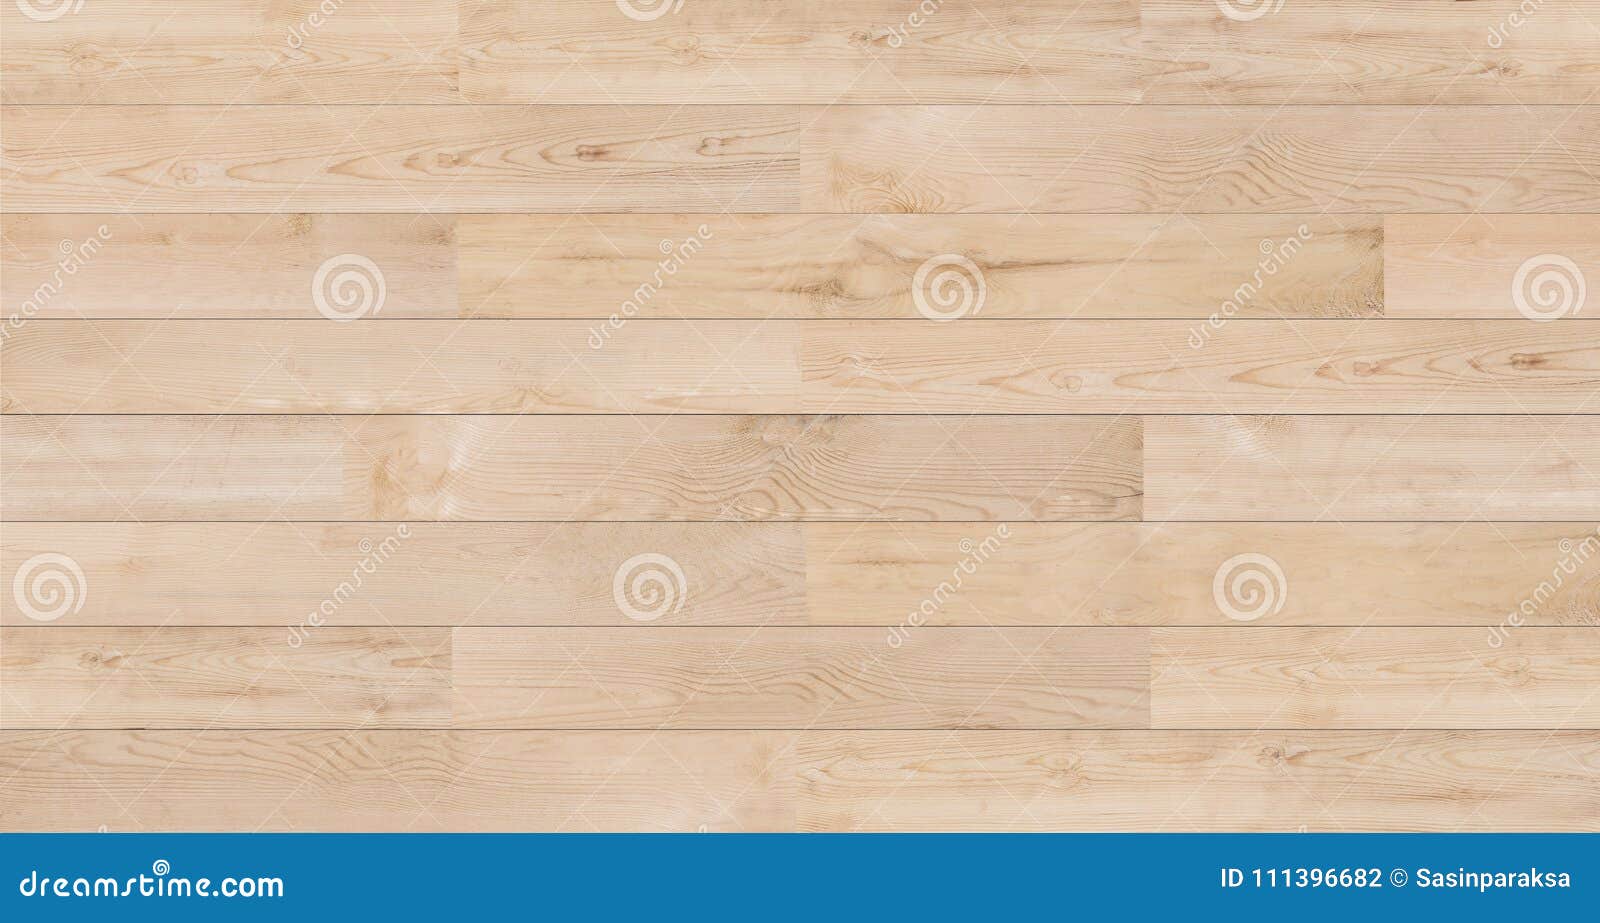 wood texture background, seamless oak wood floor